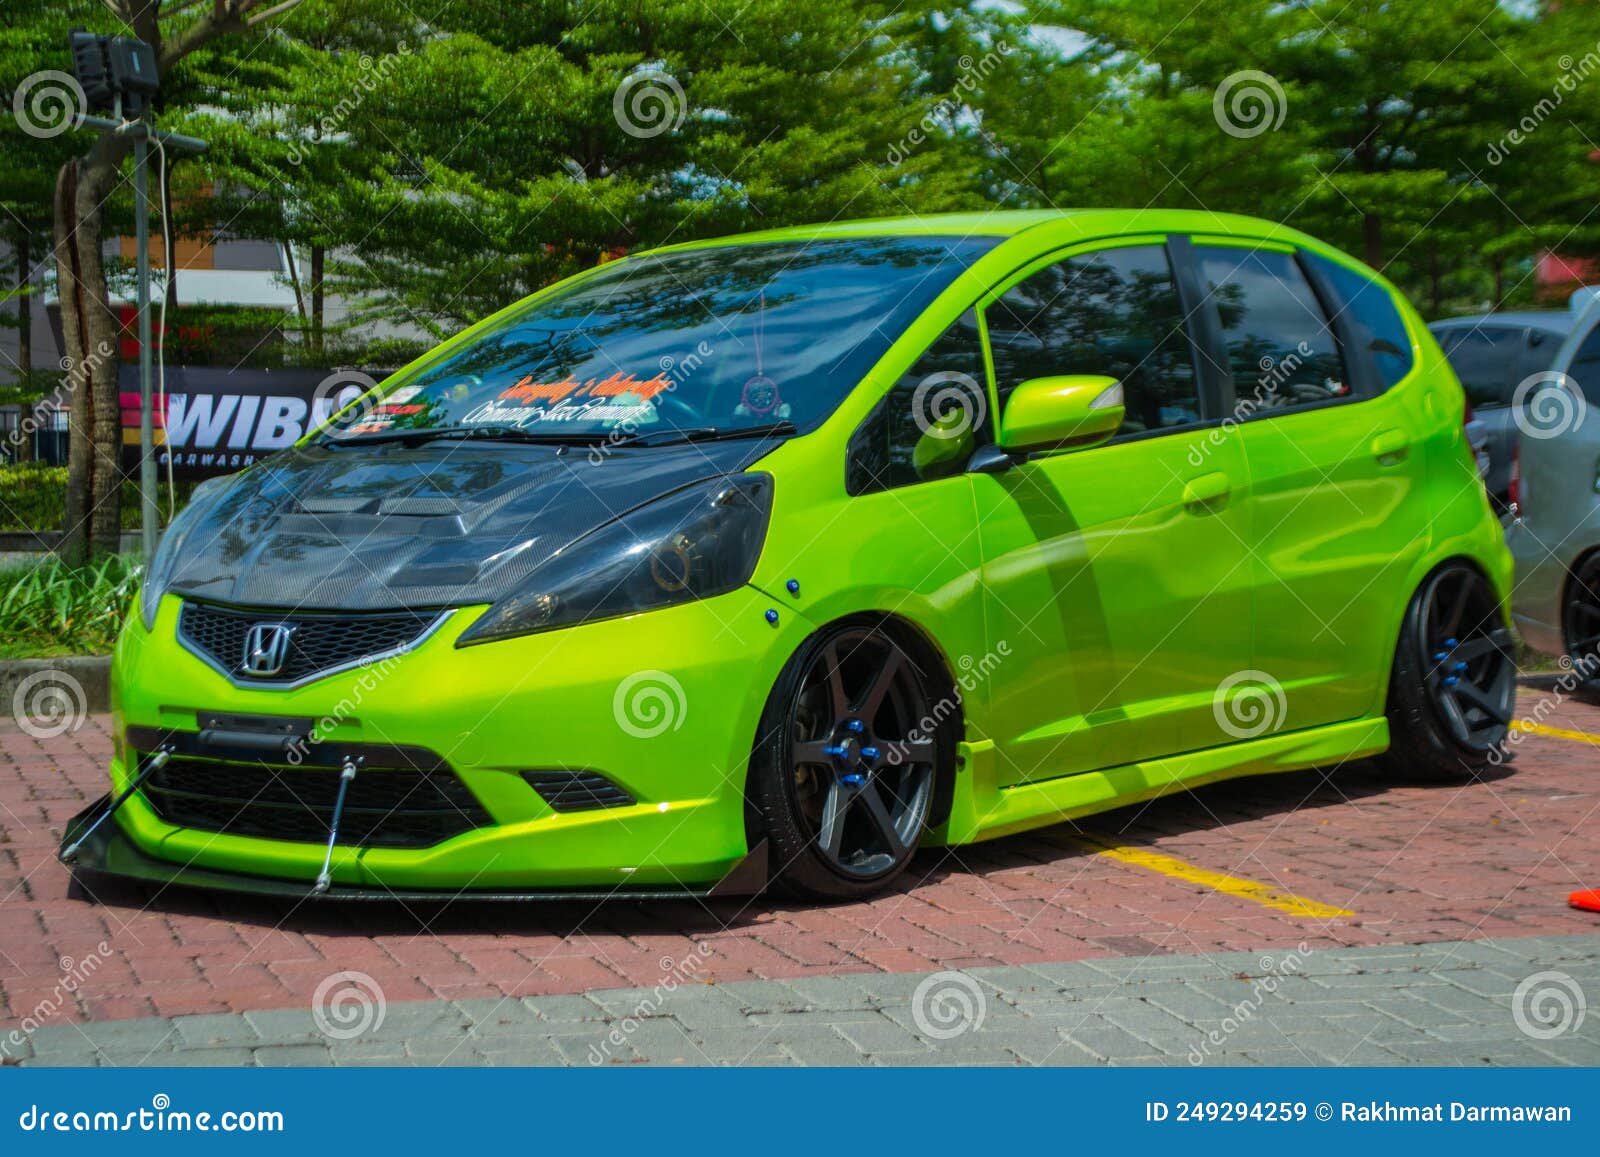 Modified Green Honda Jazz or Honda Fit in Car Show Editorial Stock